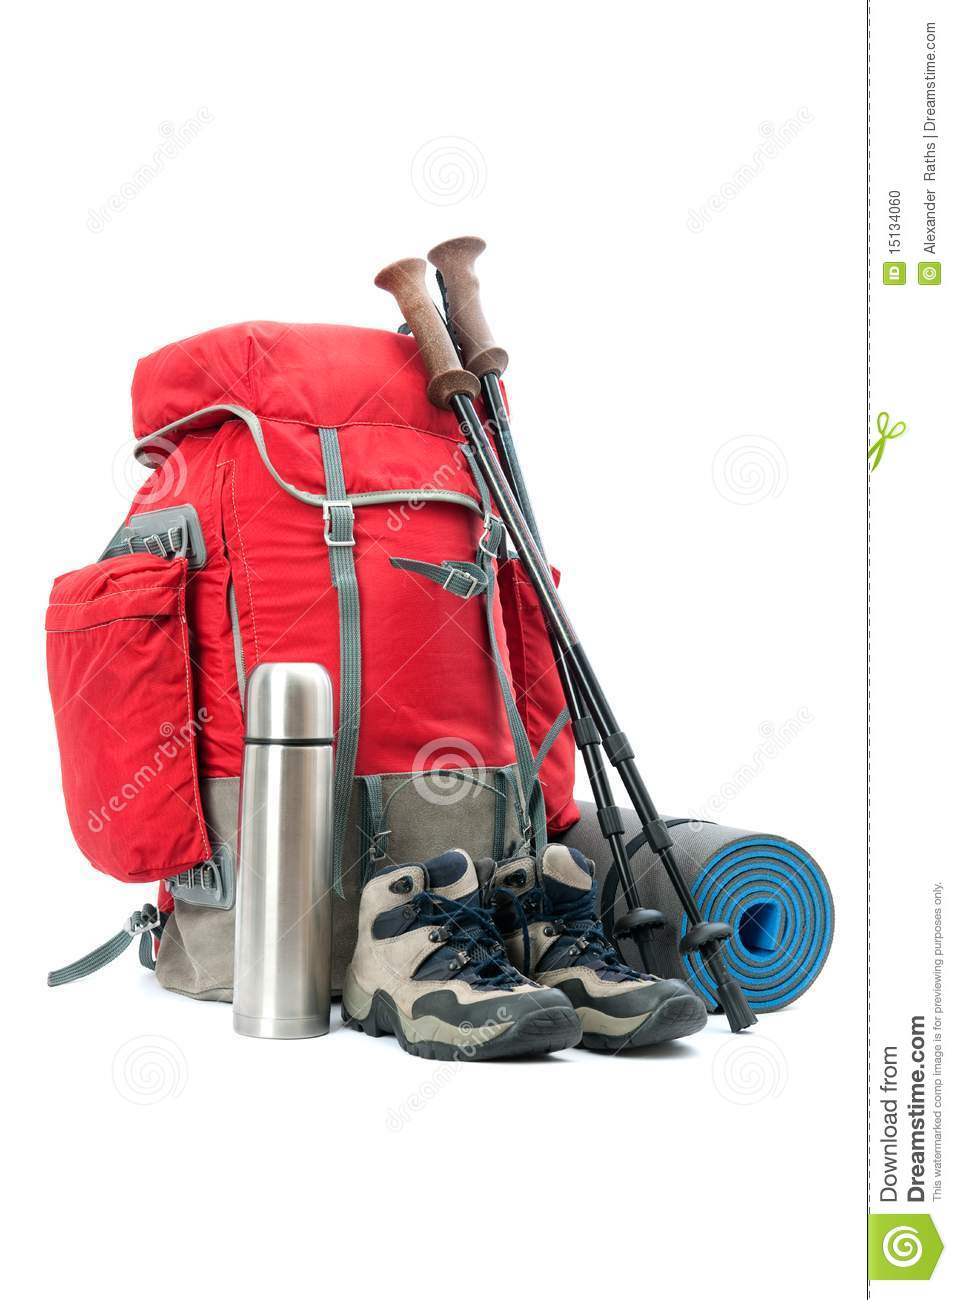 Hiking Equipment Rucksack Boots And Slipping Pad